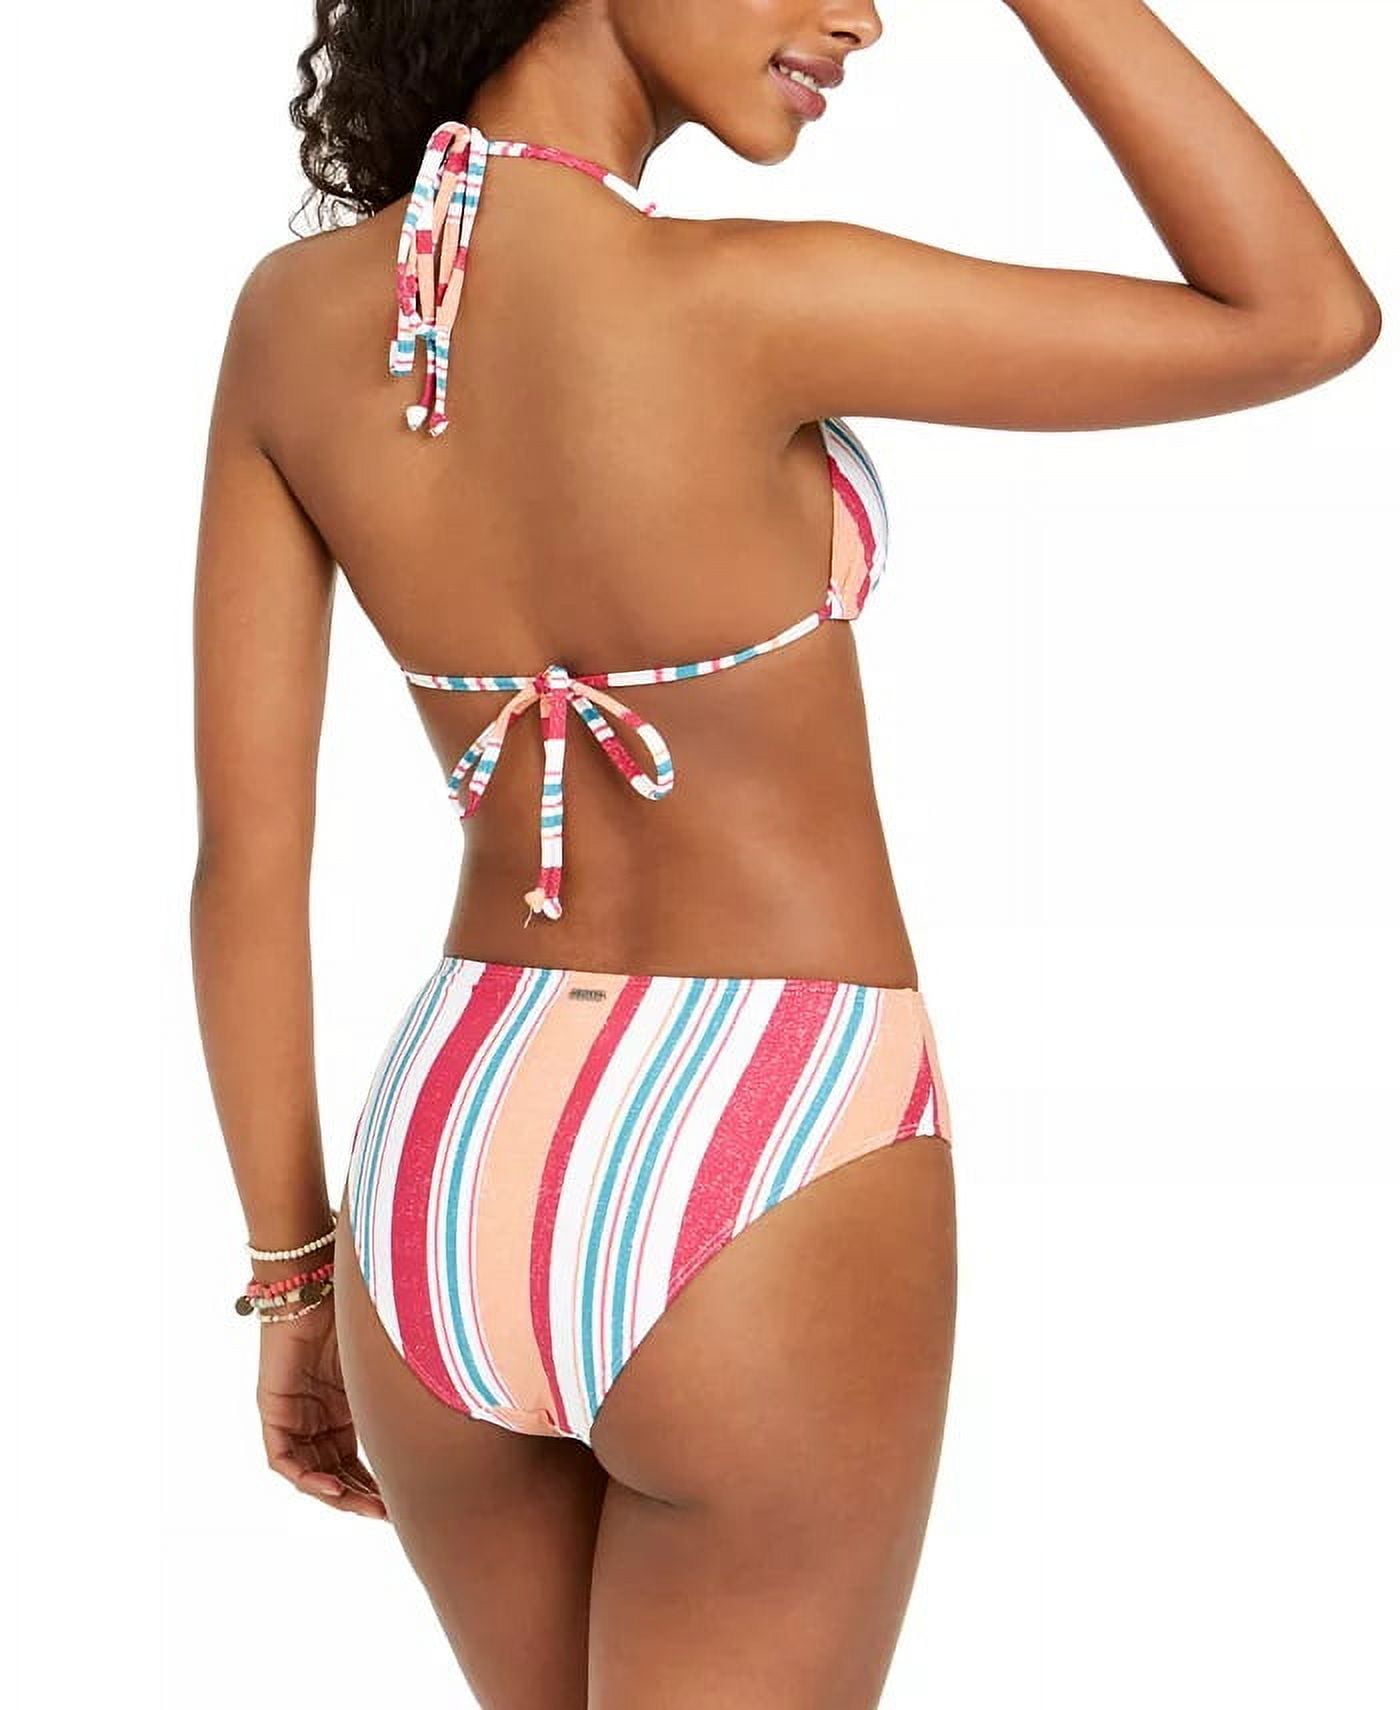 Fuller Bust Beachcomber Gold Stripe Underwired Halter Bikini Top